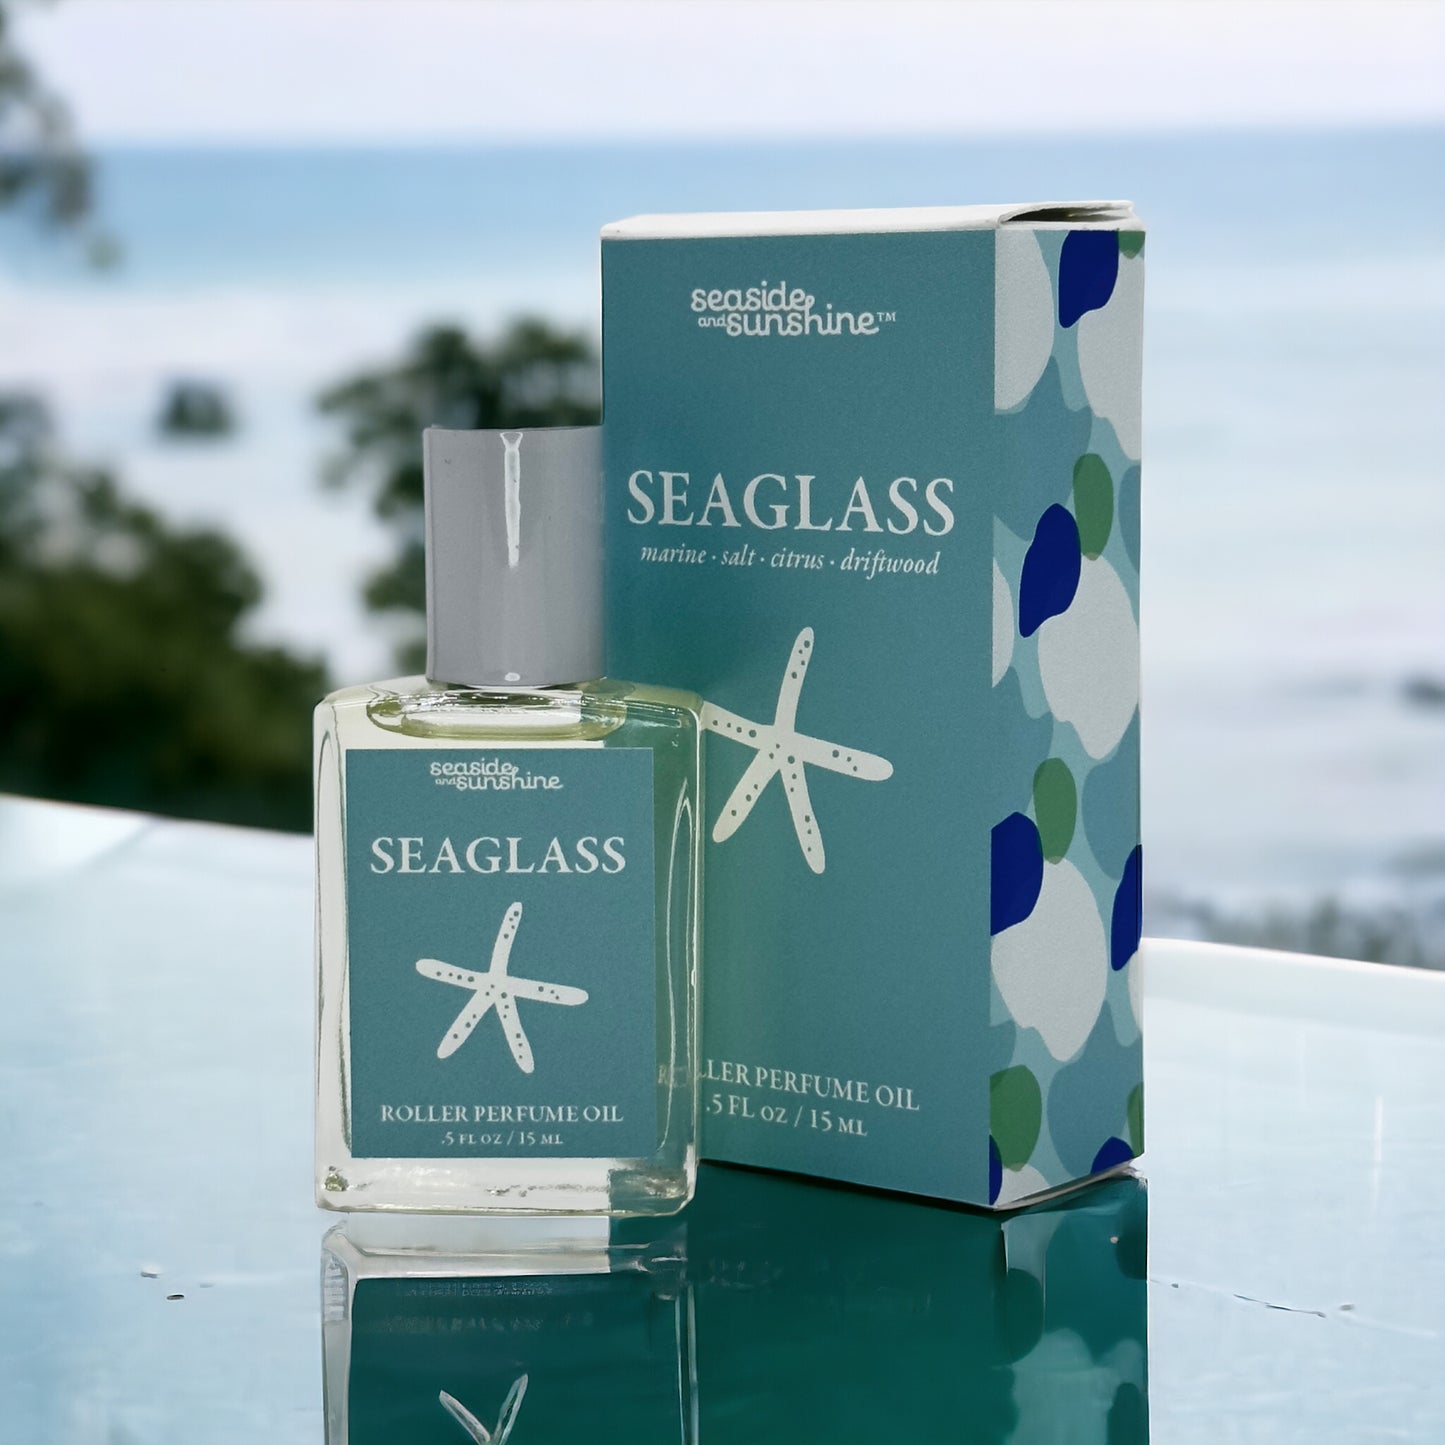 SEAGLASS Roller Perfume